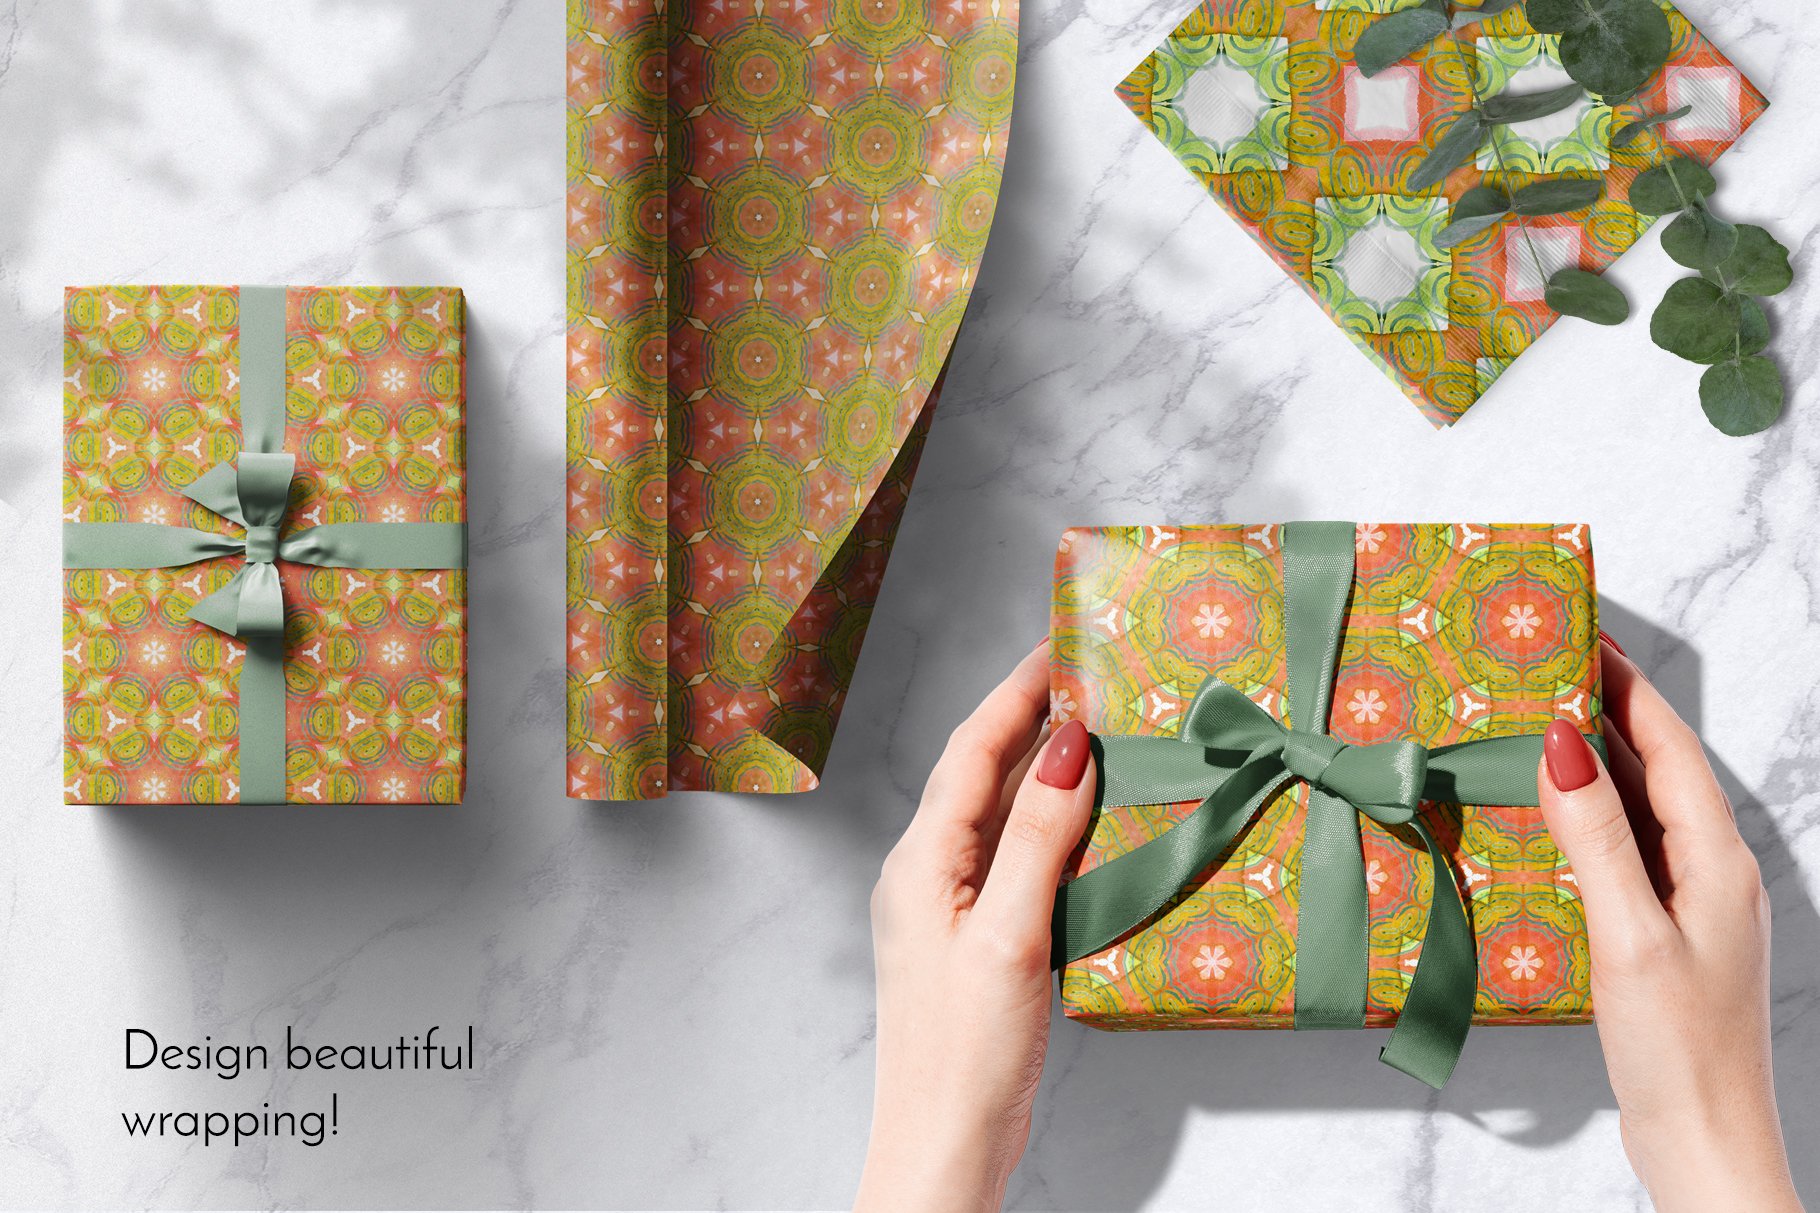 Design beautiful wrapping.